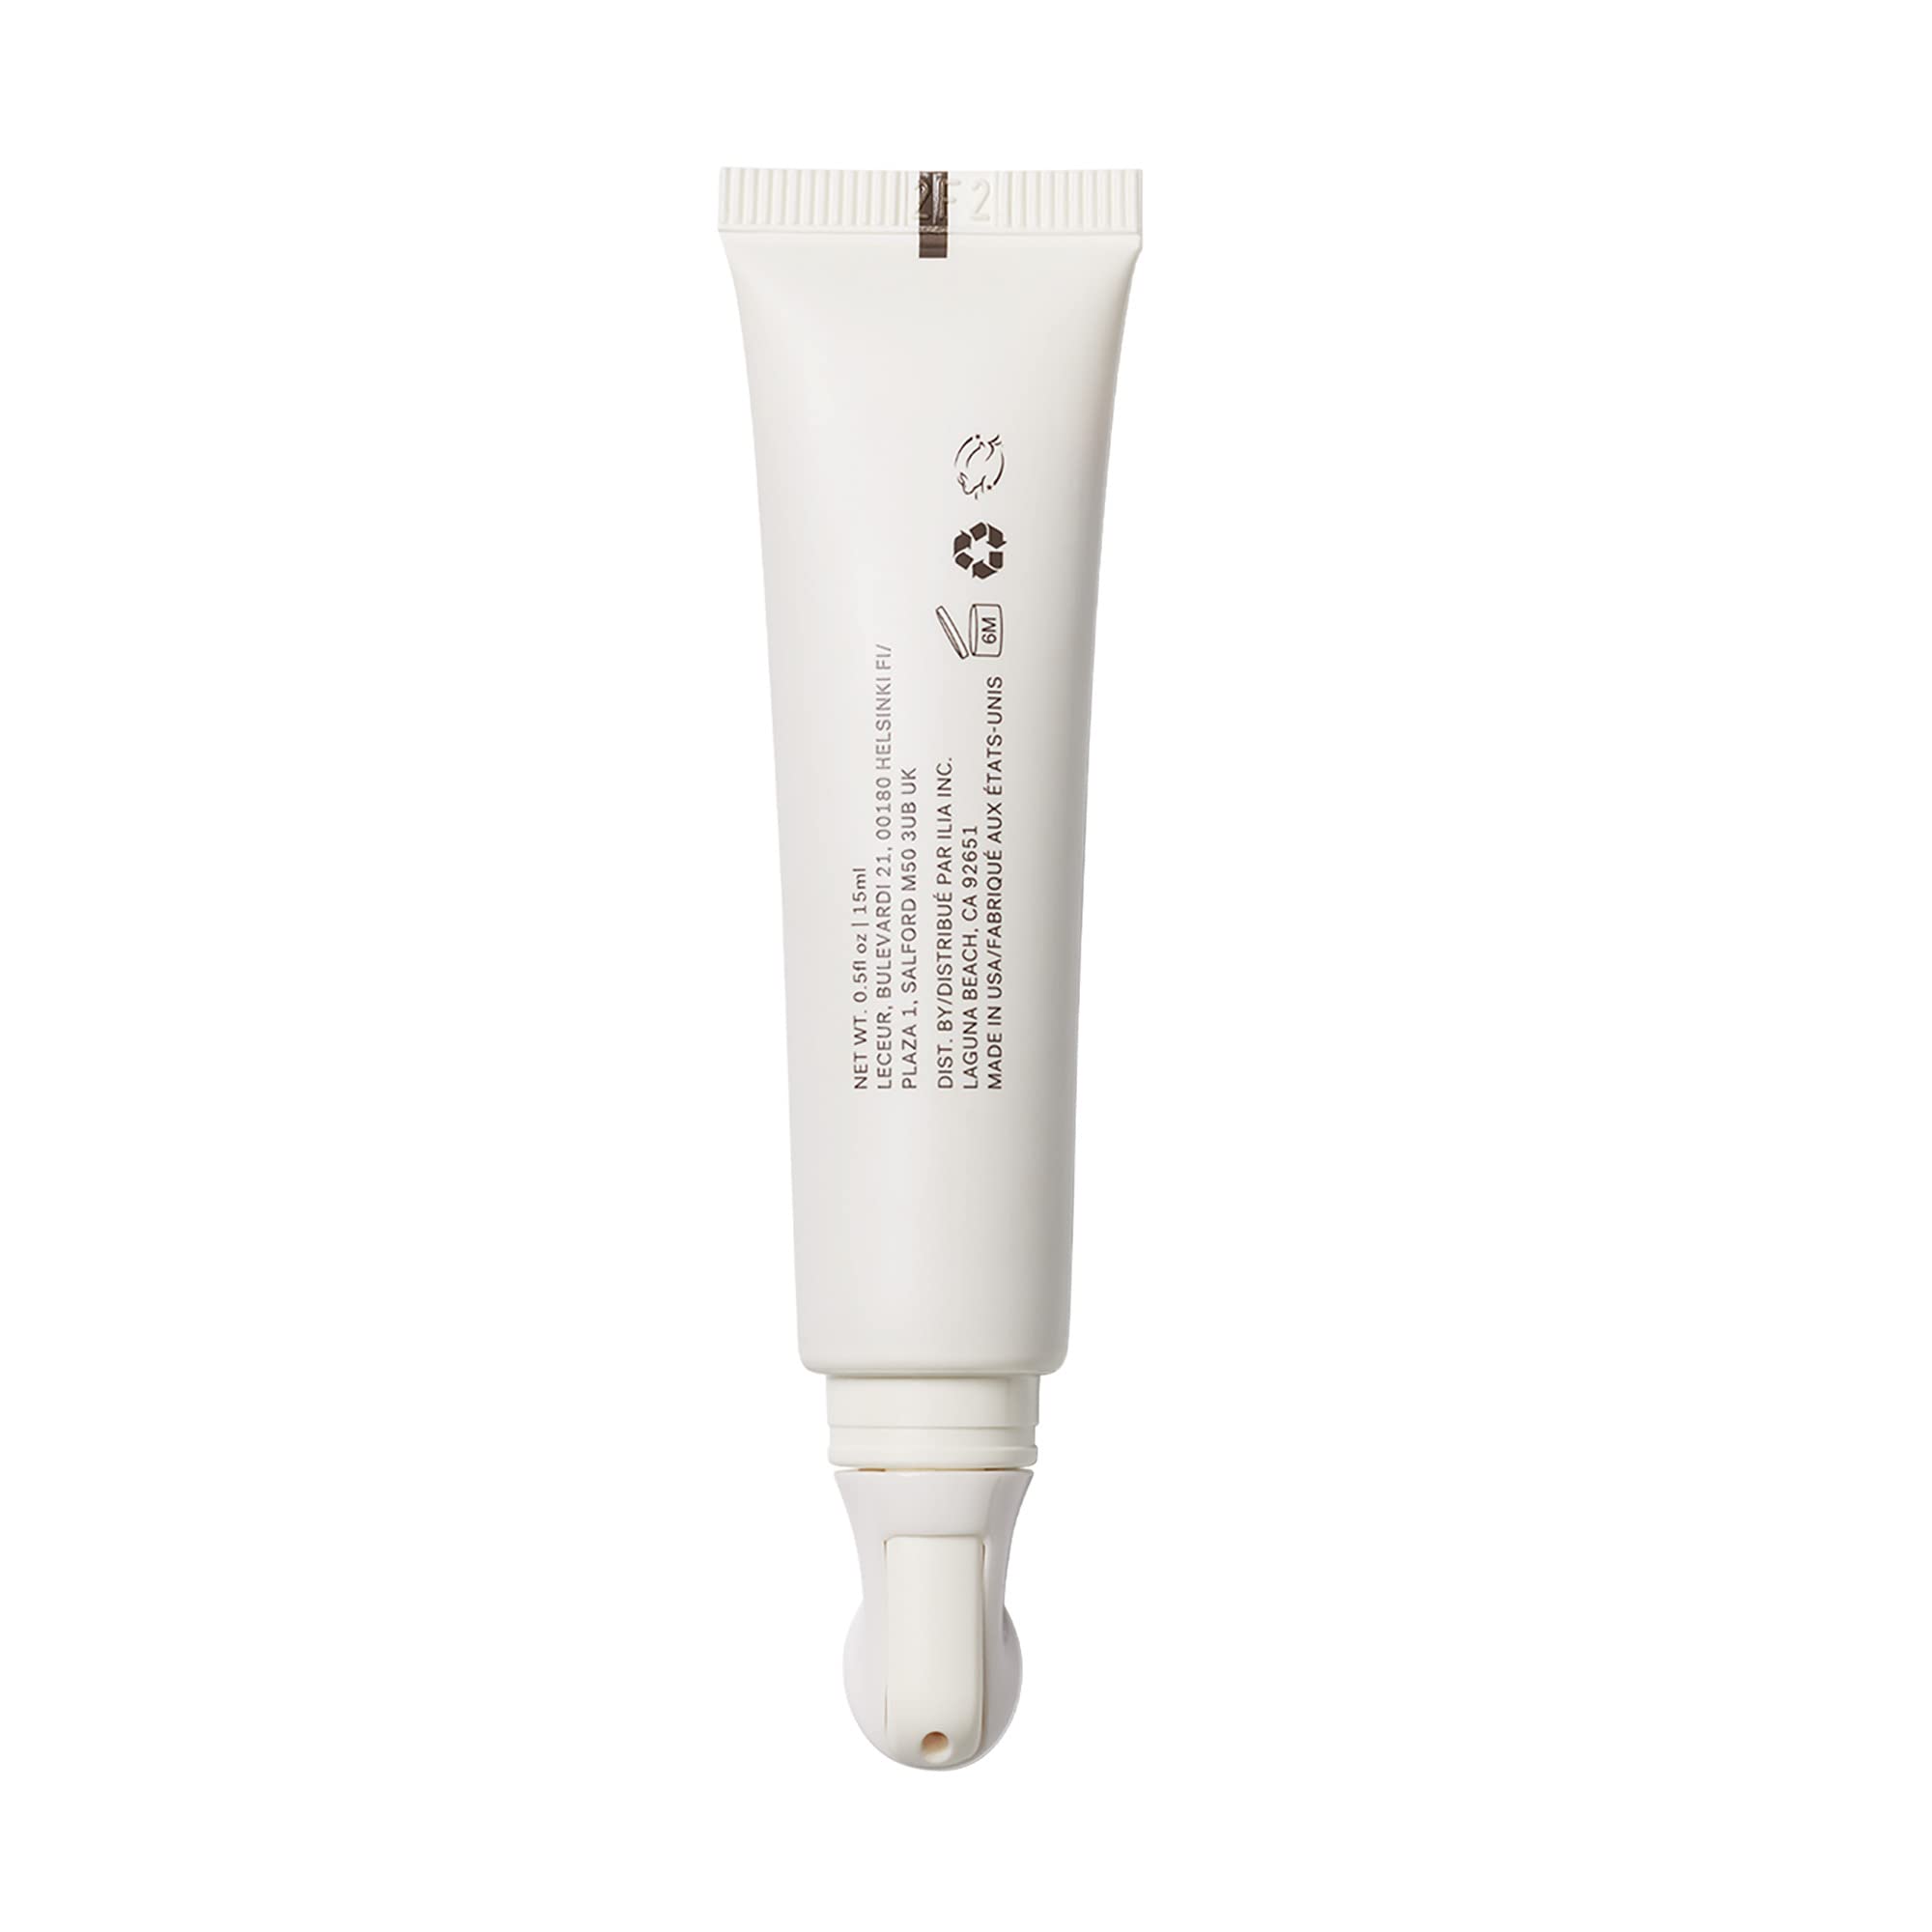 ILIA - Plant-Based Bright Start Activated Eye Cream | Cruelty-Free, Vegan, Clean Beauty (0.5 oz | 15 ml)